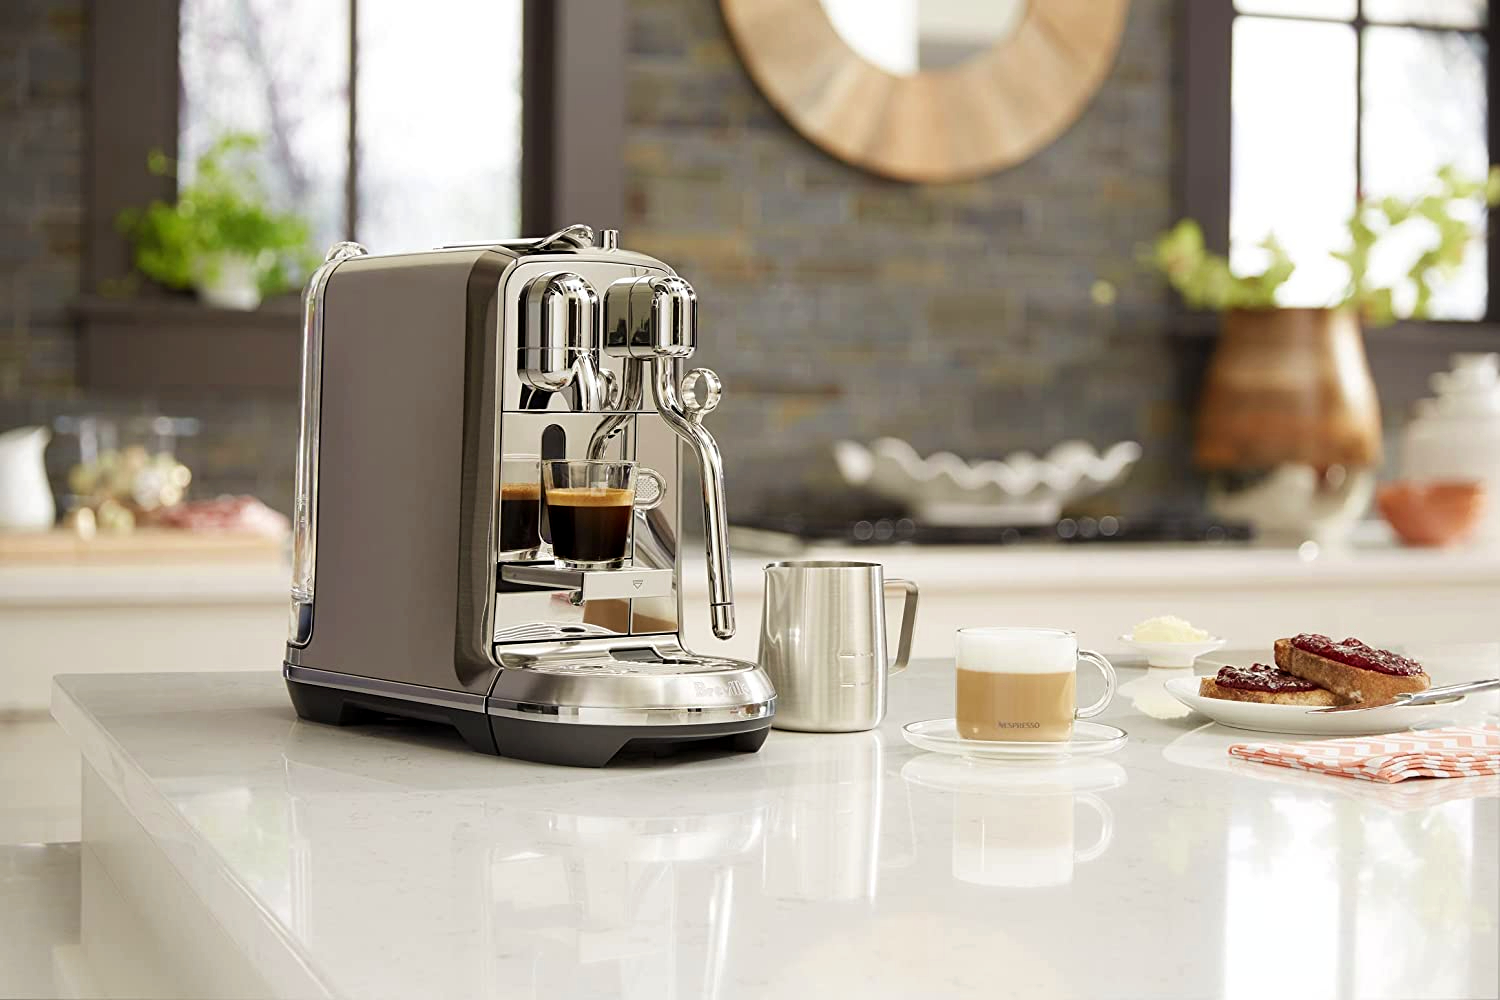 https://www.digitaltrends.com/wp-content/uploads/2020/06/breville-nespresso-usa-nespresso-creatista-plus-coffee-espresso-machine-1.jpg?fit=1500%2C1000&p=1